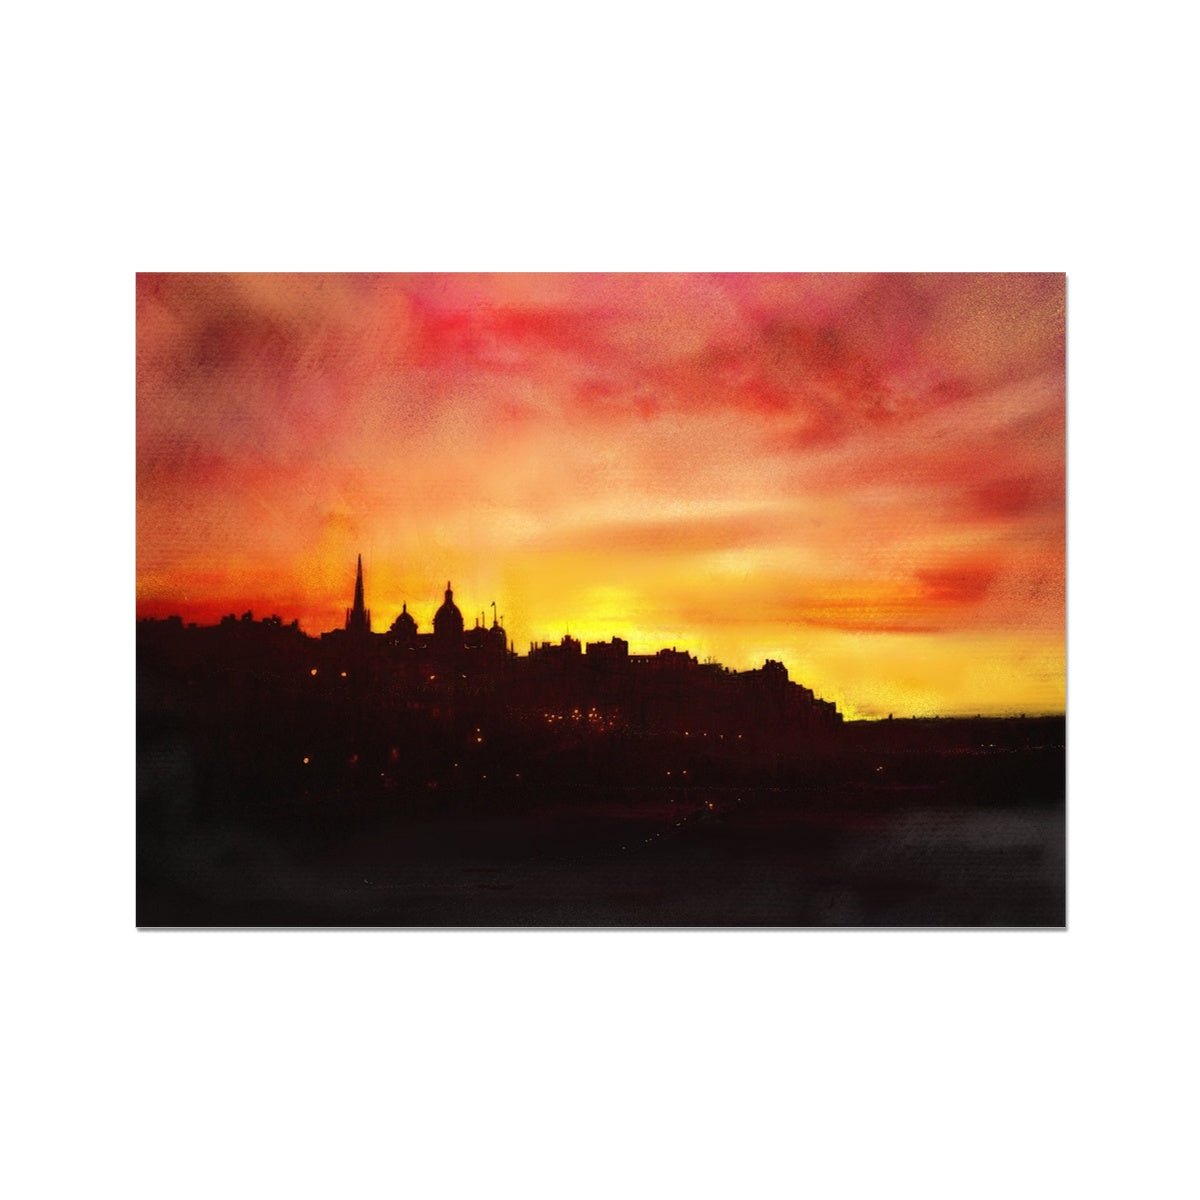 Edinburgh Sunset Painting | Fine Art Prints From Scotland-Unframed Prints-Edinburgh & Glasgow Art Gallery-A2 Landscape-Paintings, Prints, Homeware, Art Gifts From Scotland By Scottish Artist Kevin Hunter